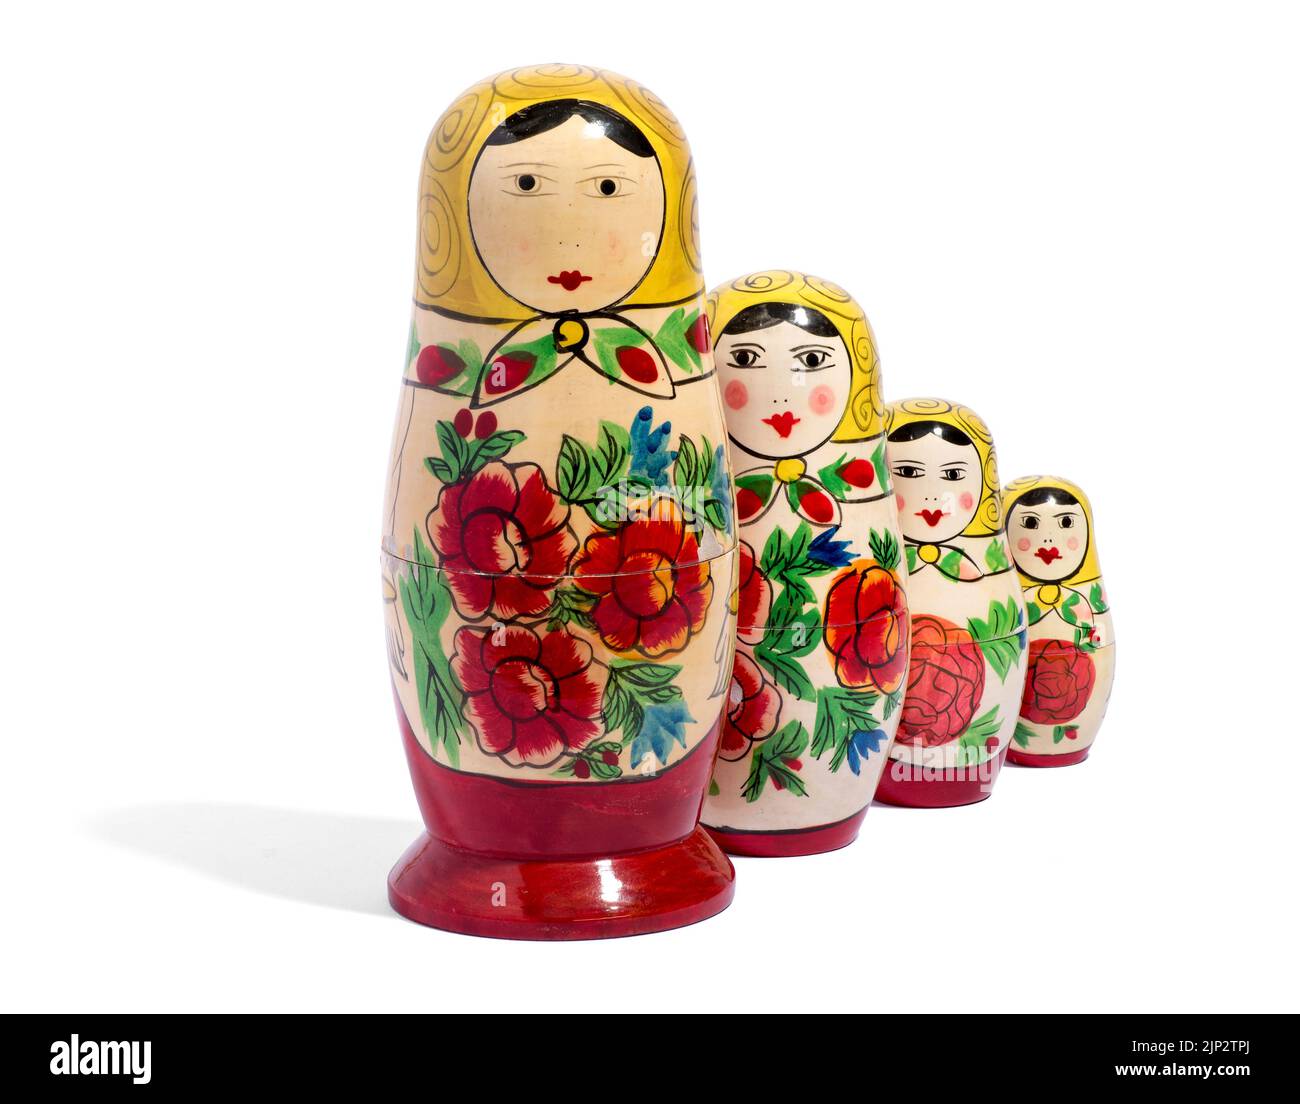 souvenir, russia, matryoshka, souvenir, russias, matryoshka, bambola russa annidata Foto Stock